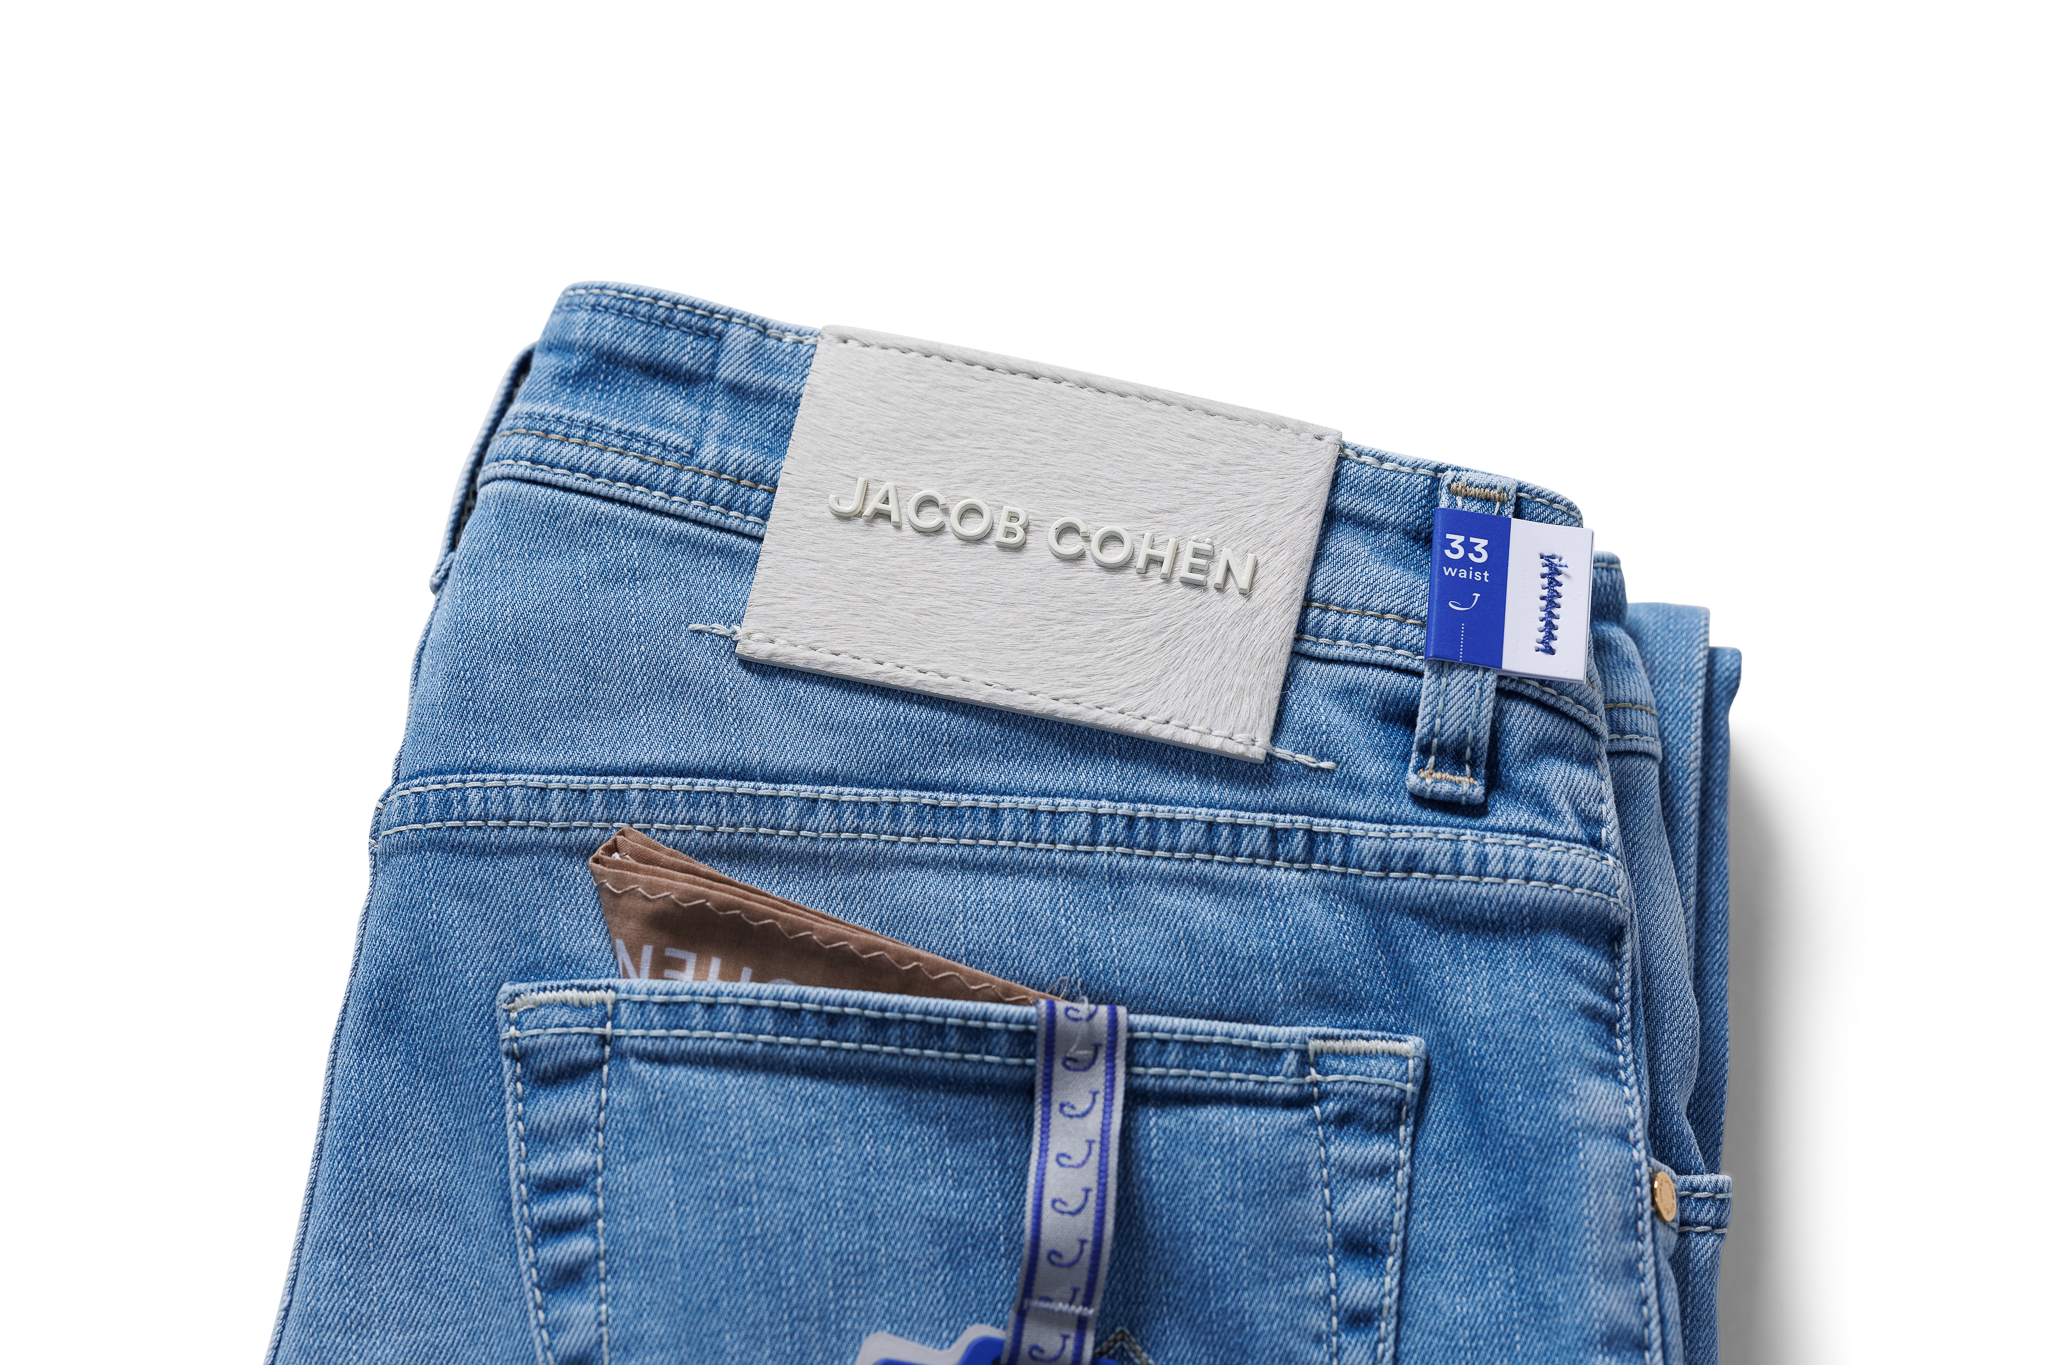 Jacob Cohen 5 Pocket Katoen - Lichtblauw